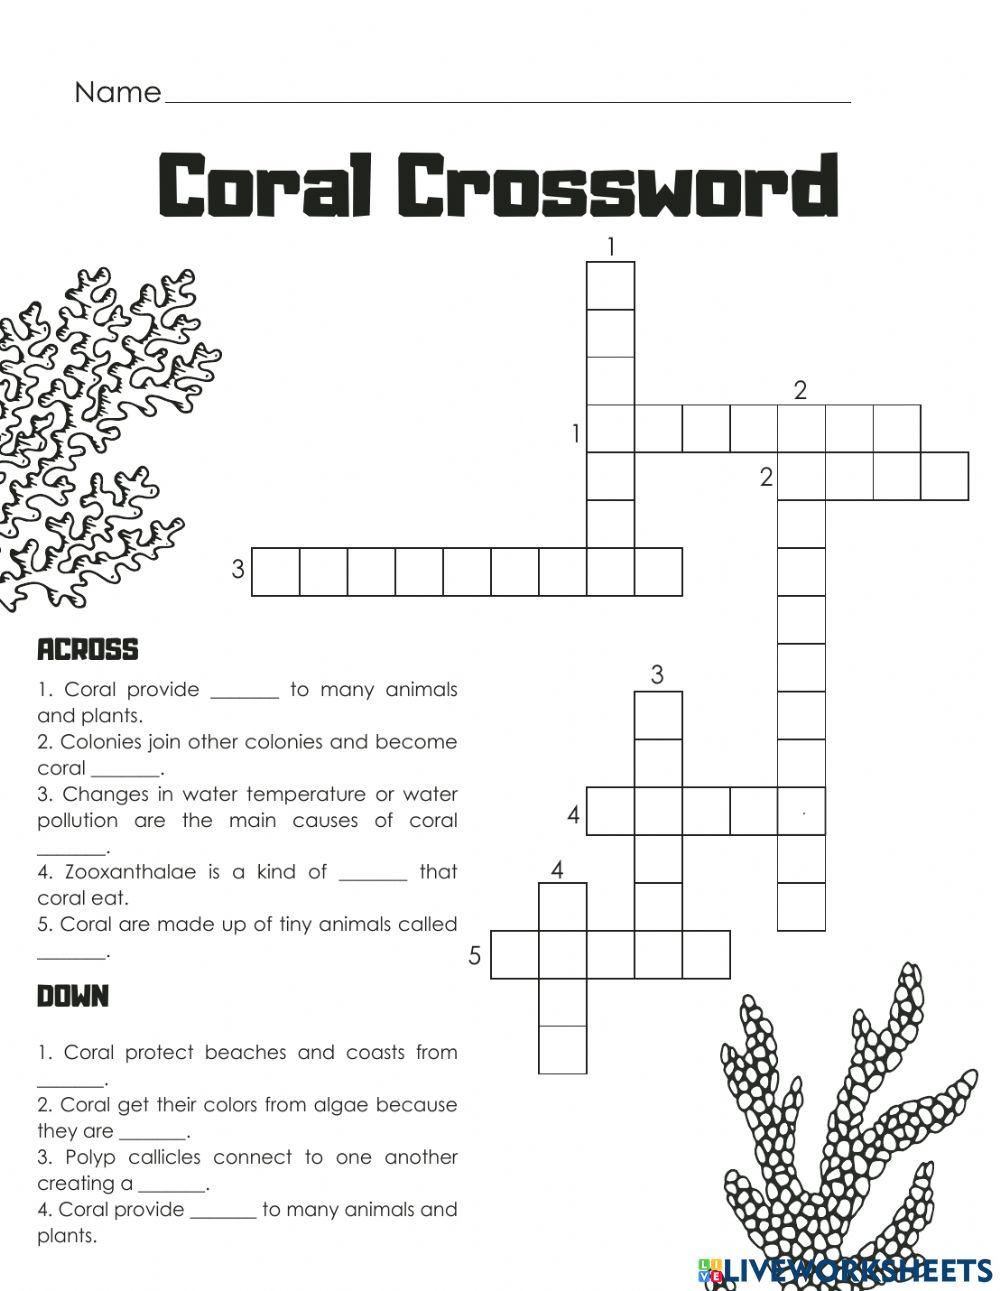 Coral crossword